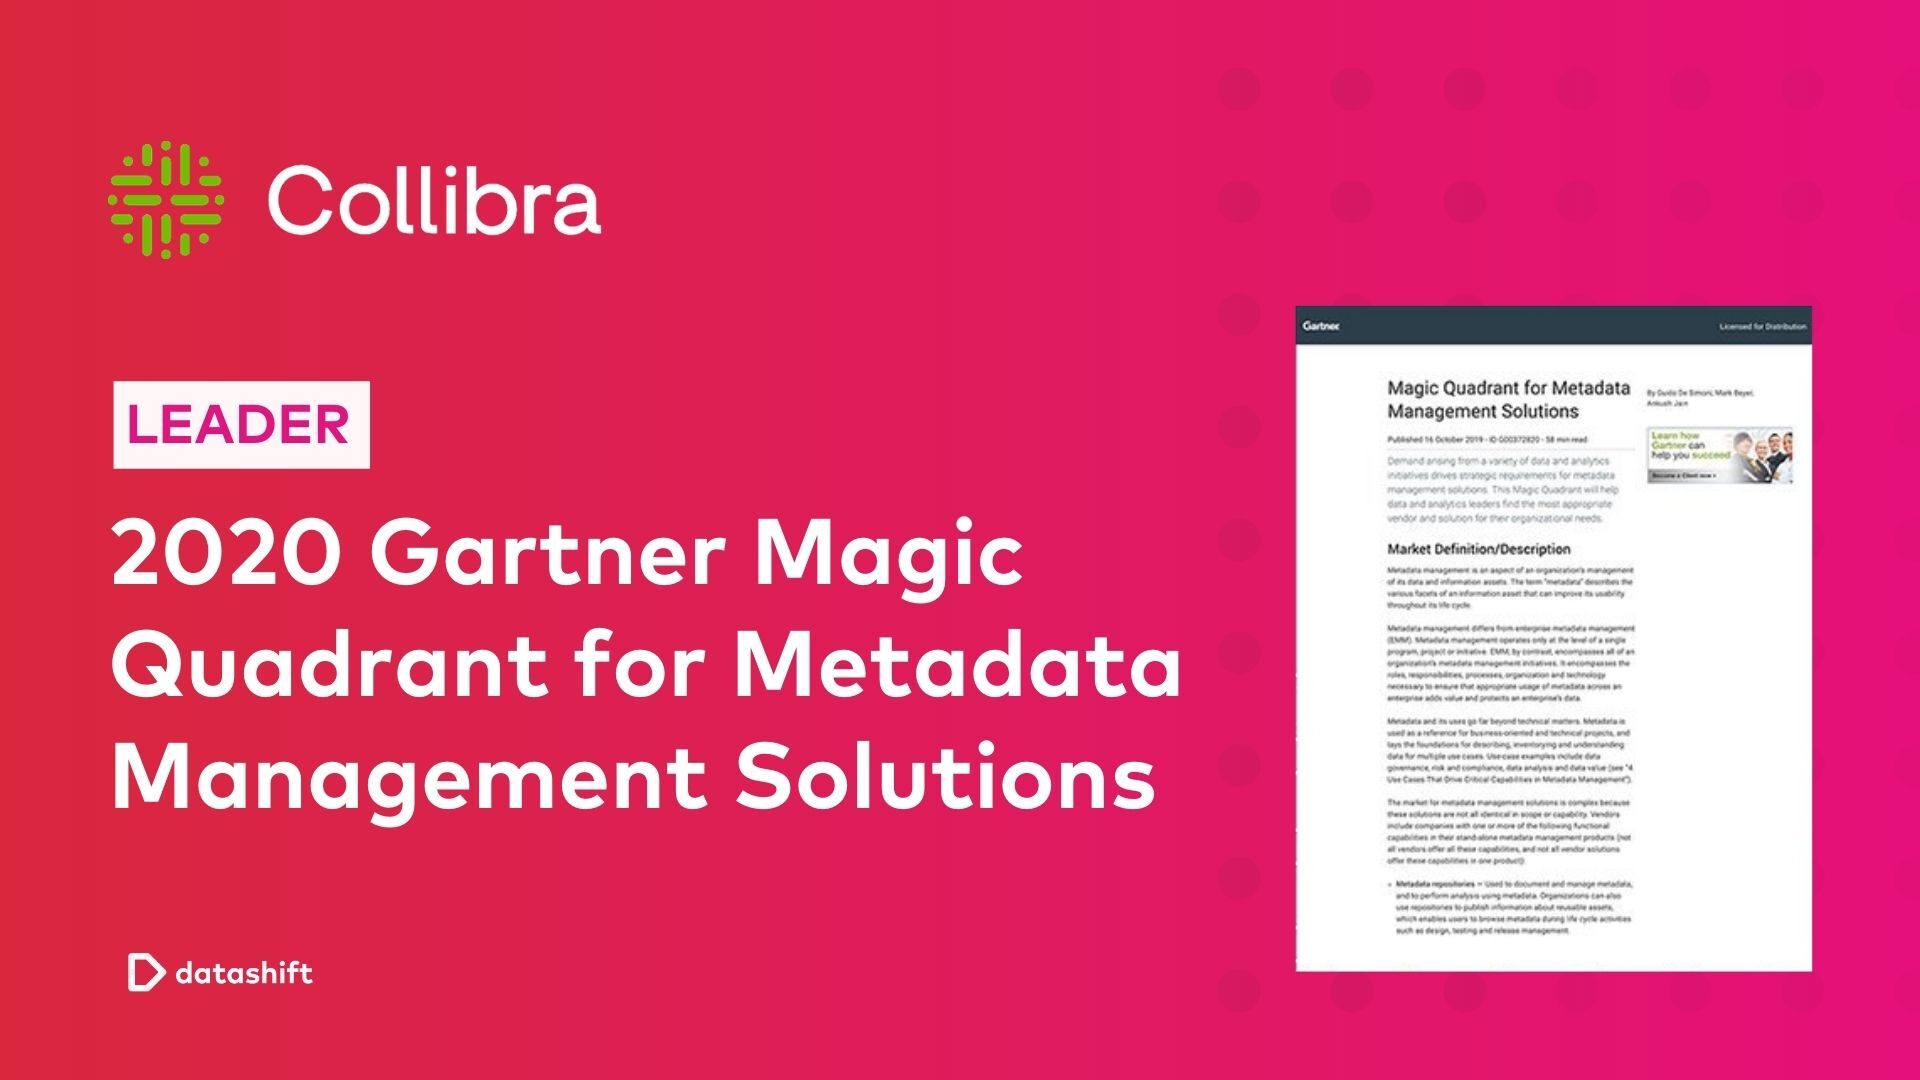 collibra data governance tool leader gartner magic quadrant meta data management